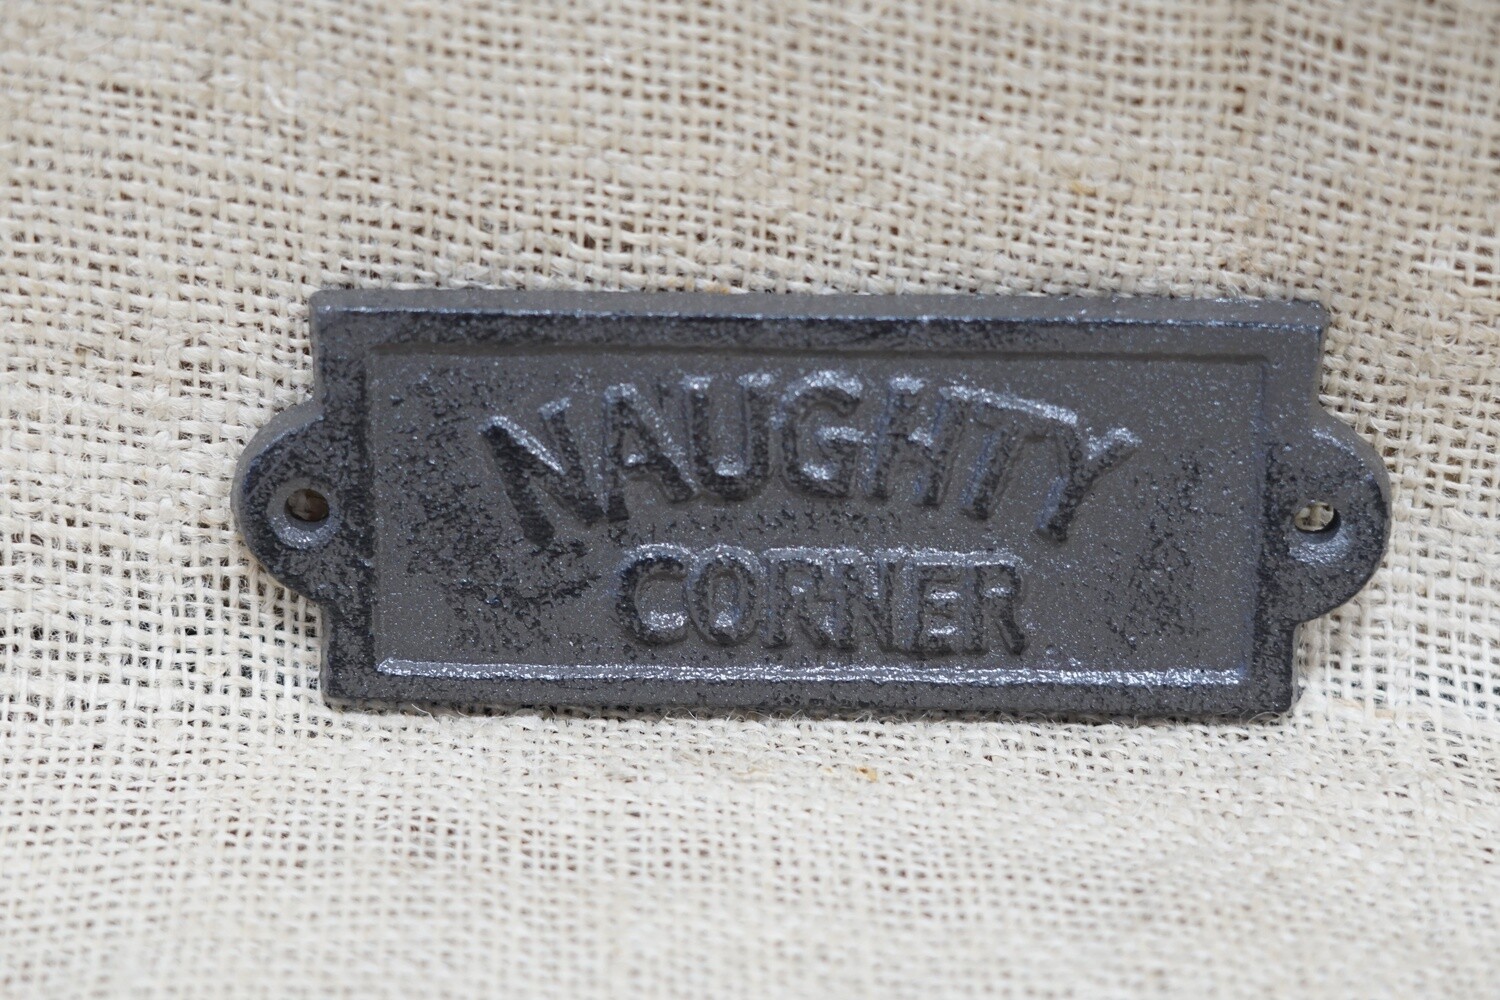 CAST IRON "NAUGHTY CORNER" SIGN